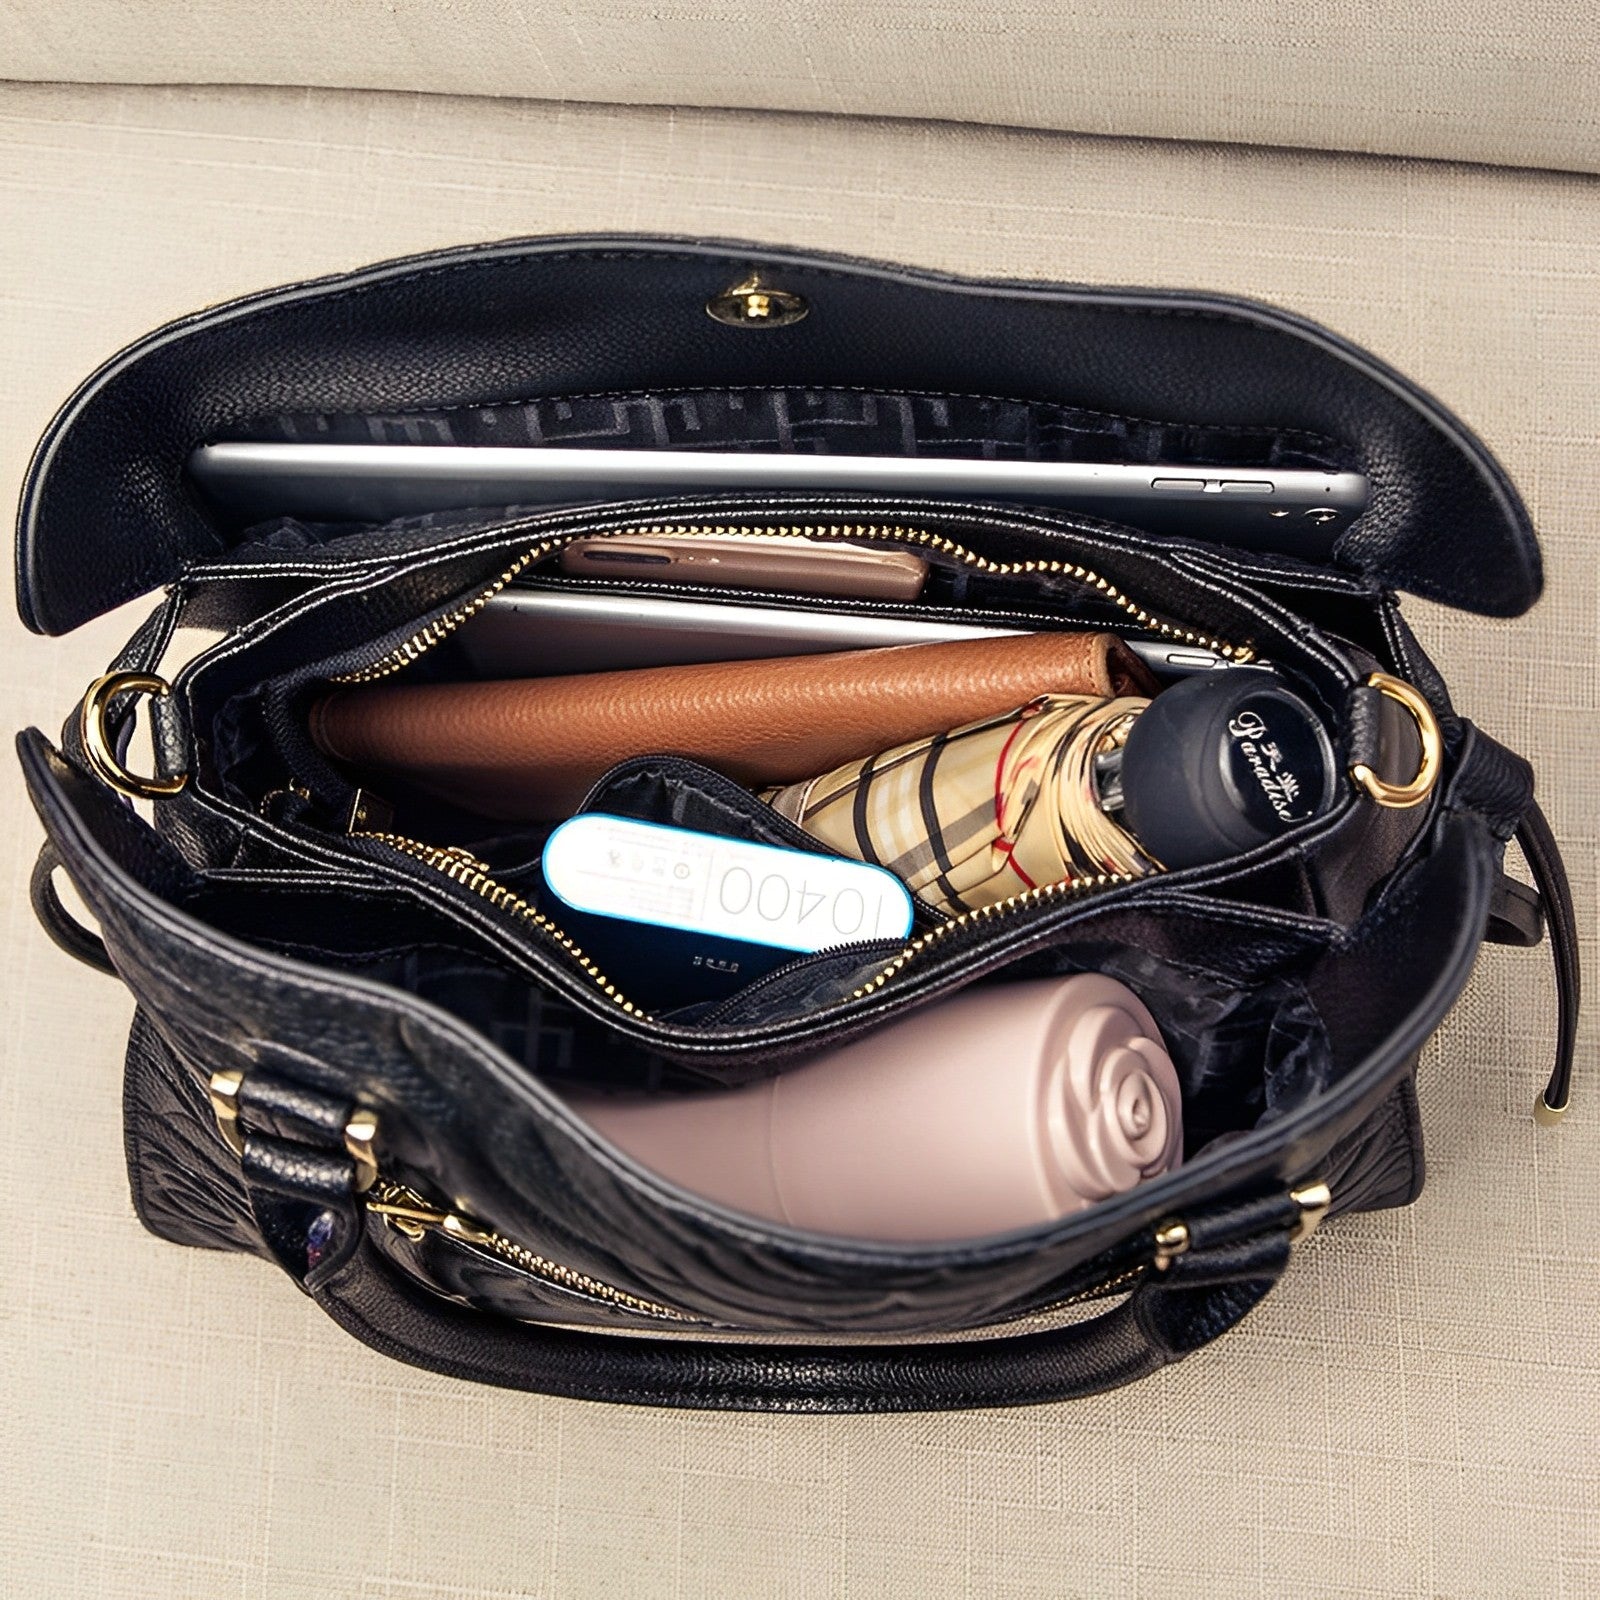 Lyla Genuine Leather Tote Bag